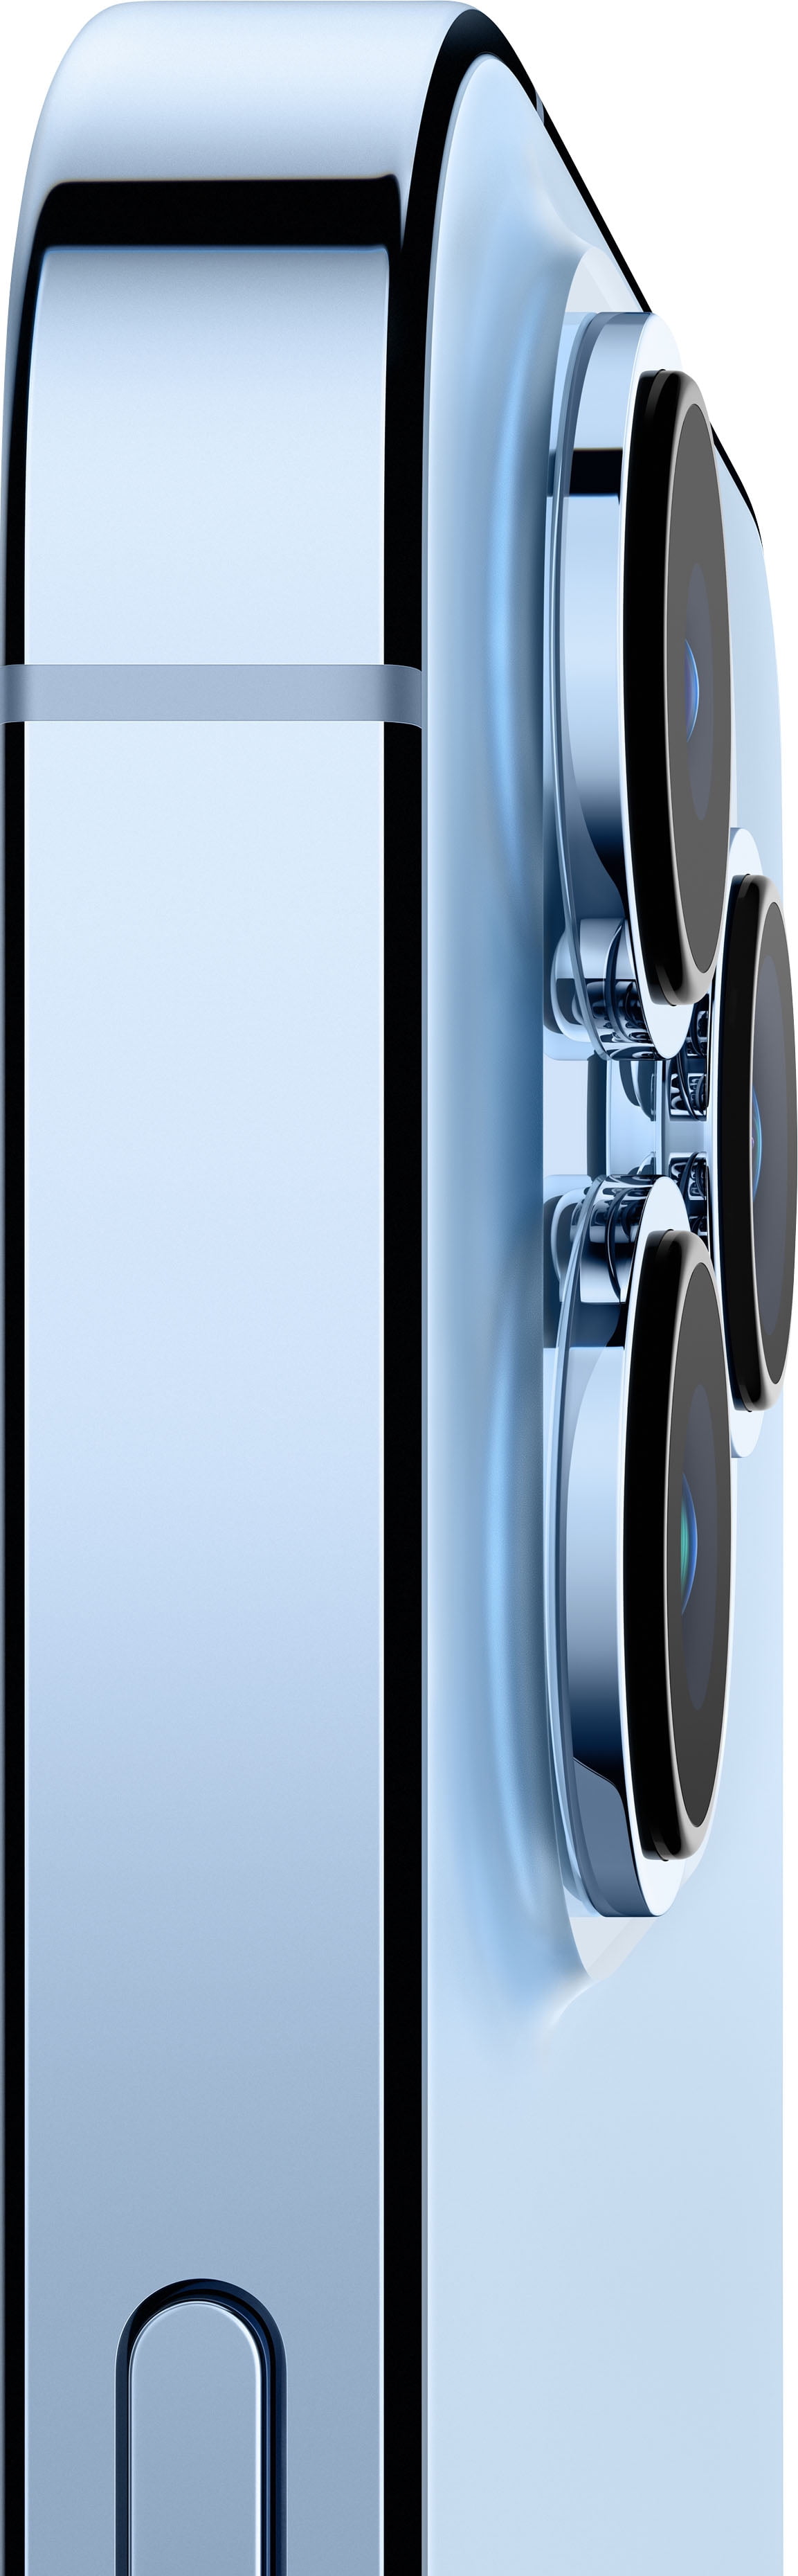 Refurbished iPhone 13 Pro 128GB - Sierra Blue (Unlocked) - Apple